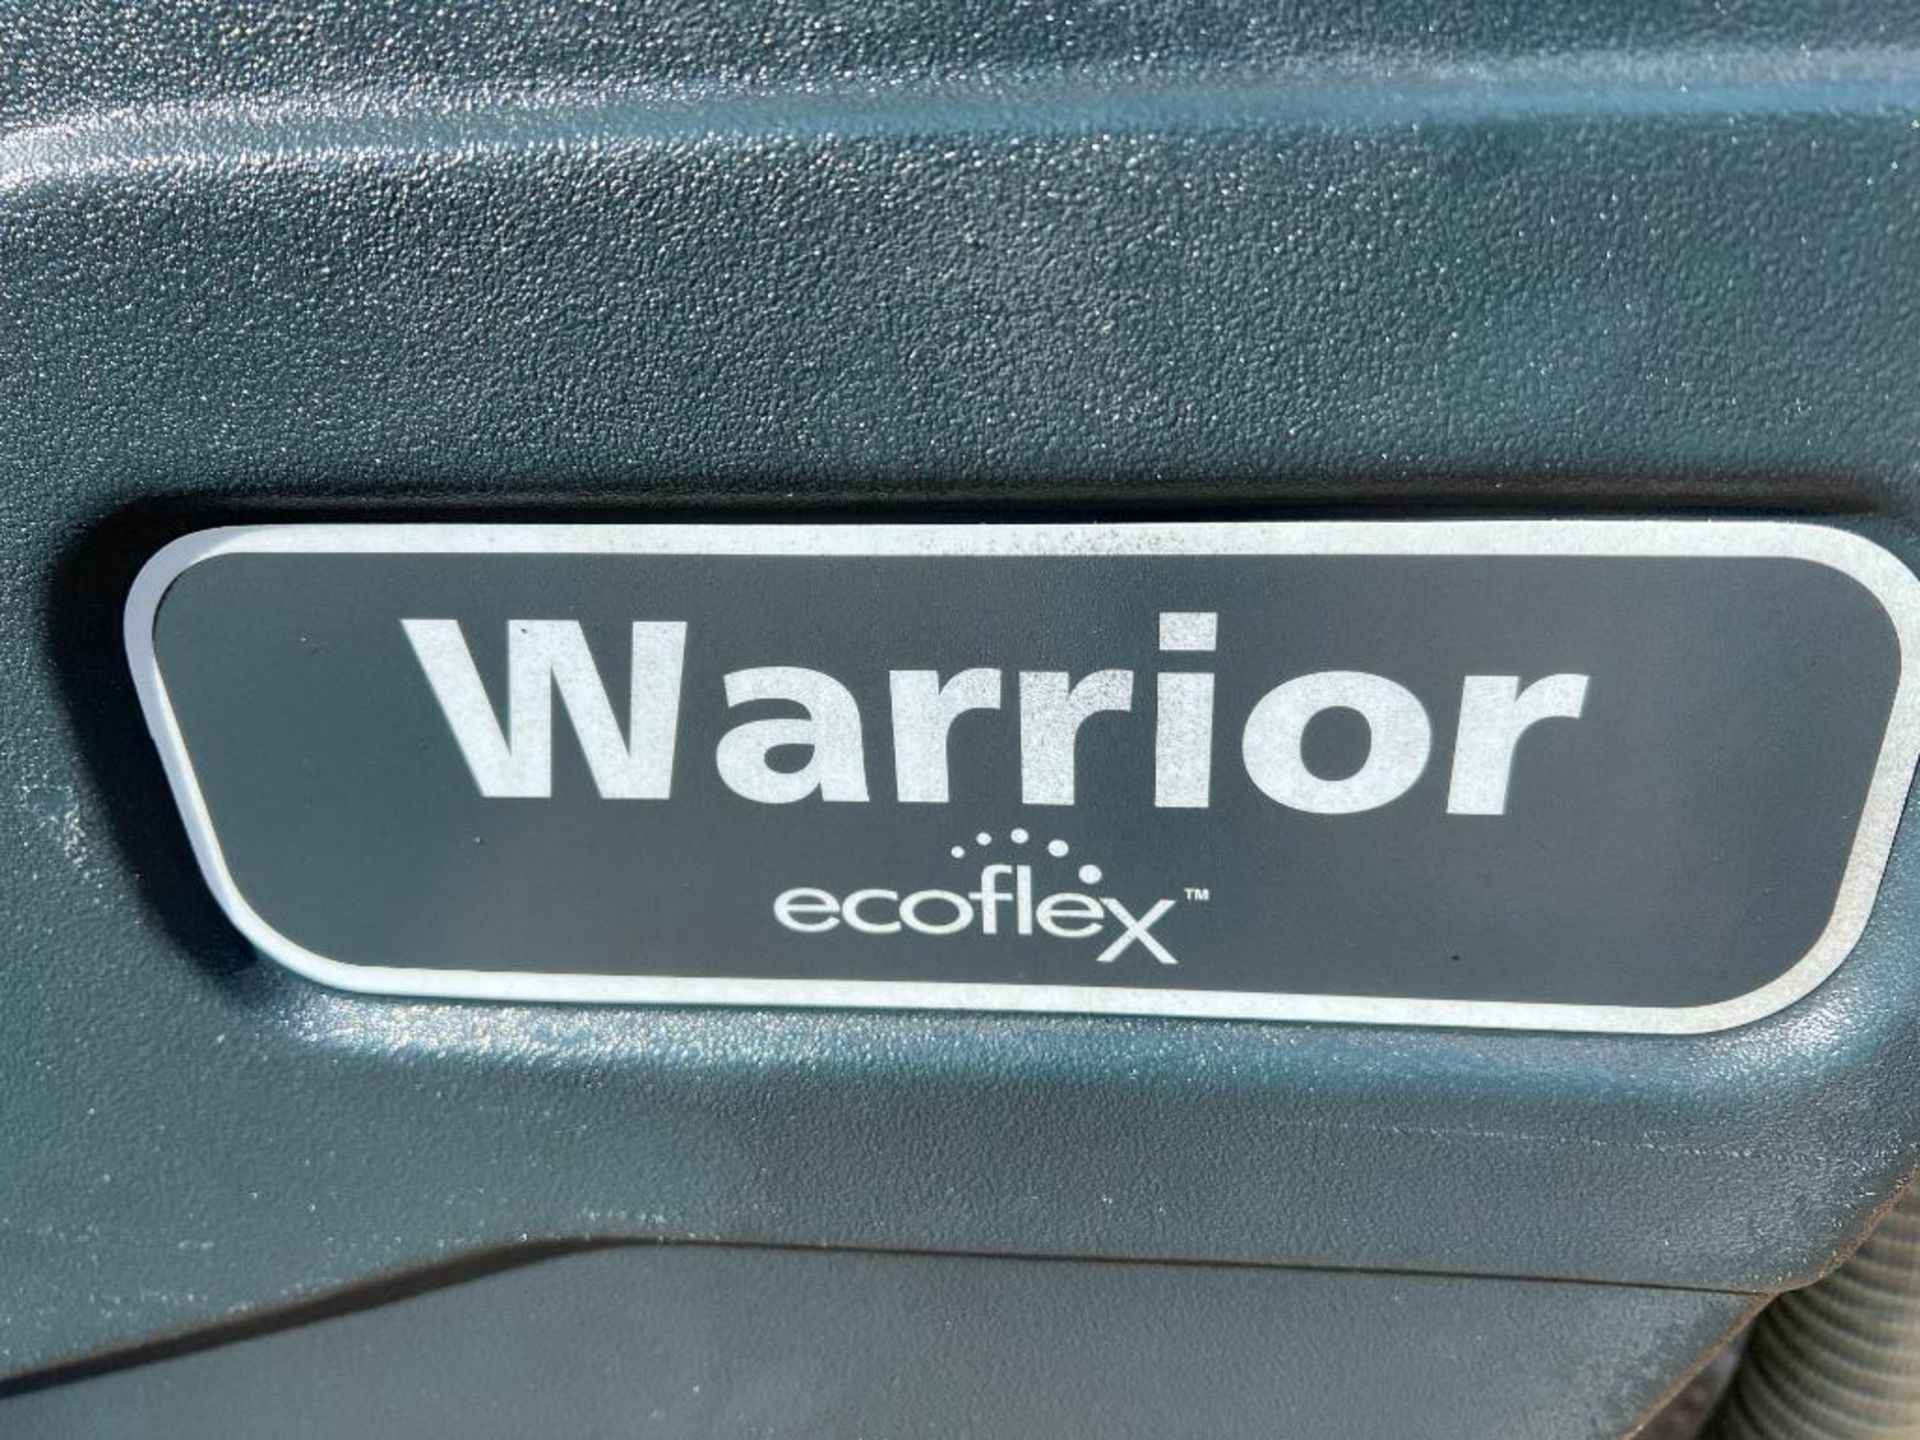 Advance Warrior Ecoflex Floor Scrubber, Model #X26D-C, Serial #N40000699571, 36V, Type E Floor Clean - Image 9 of 9